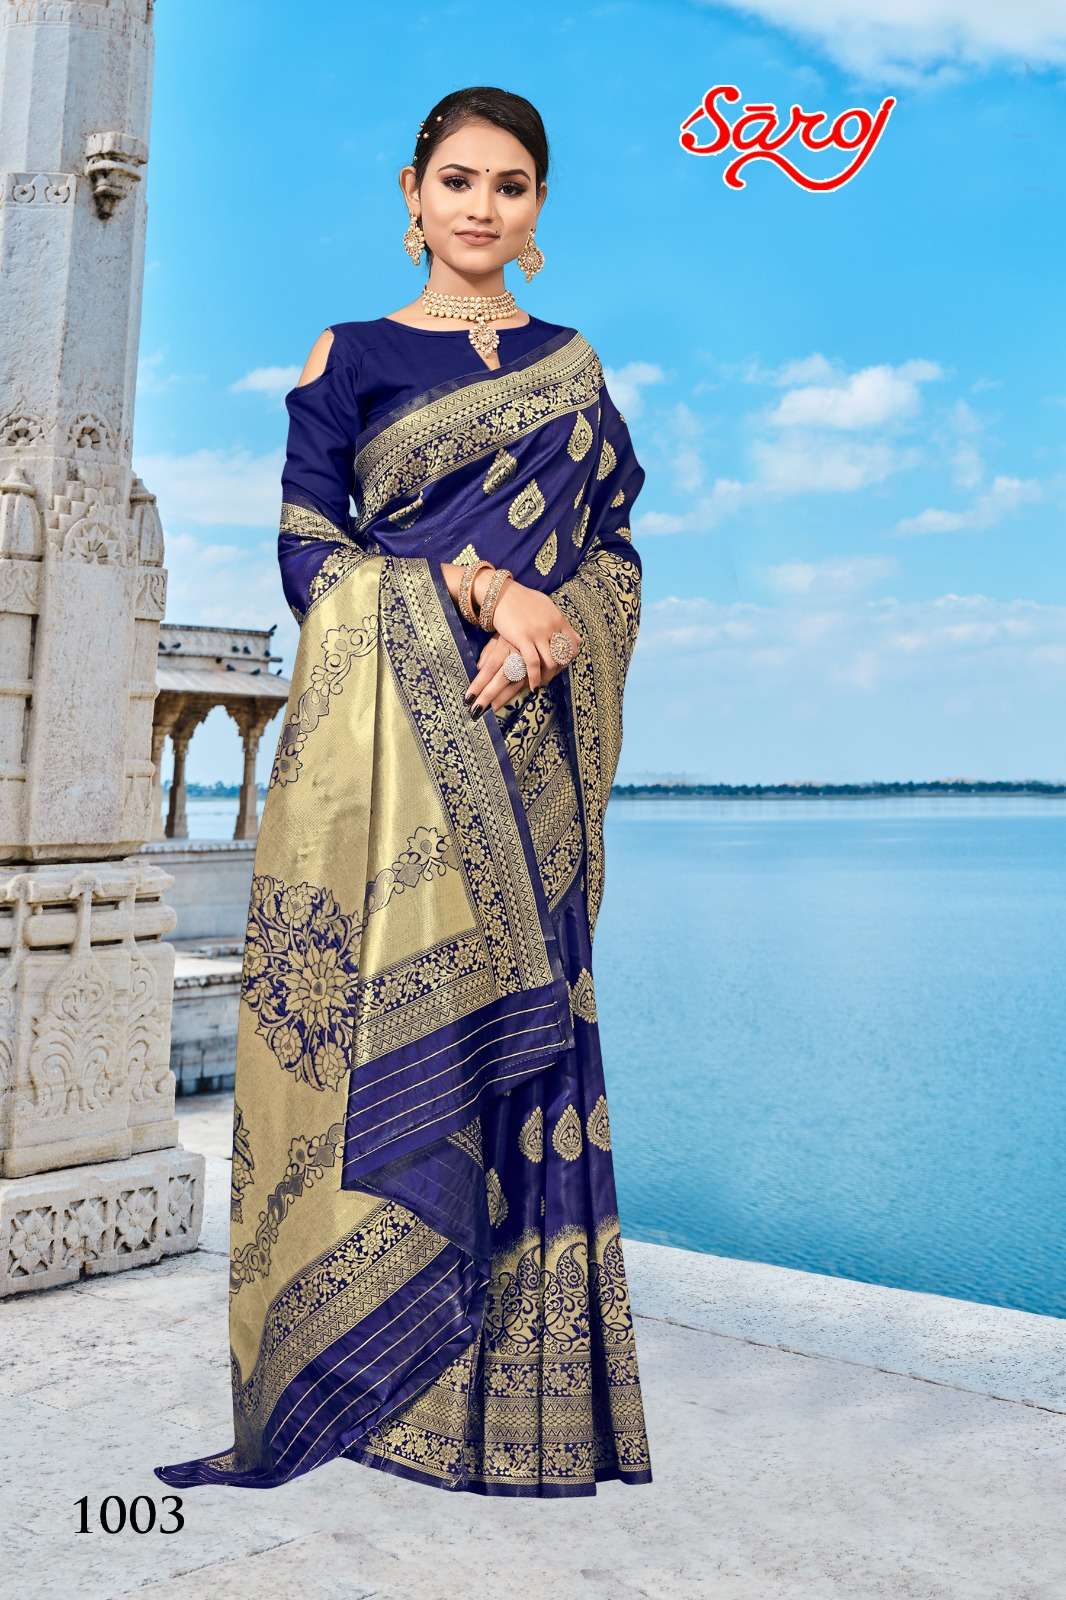 Saroj textile presents Kaamya vol 1 banarasi sarees catalogue